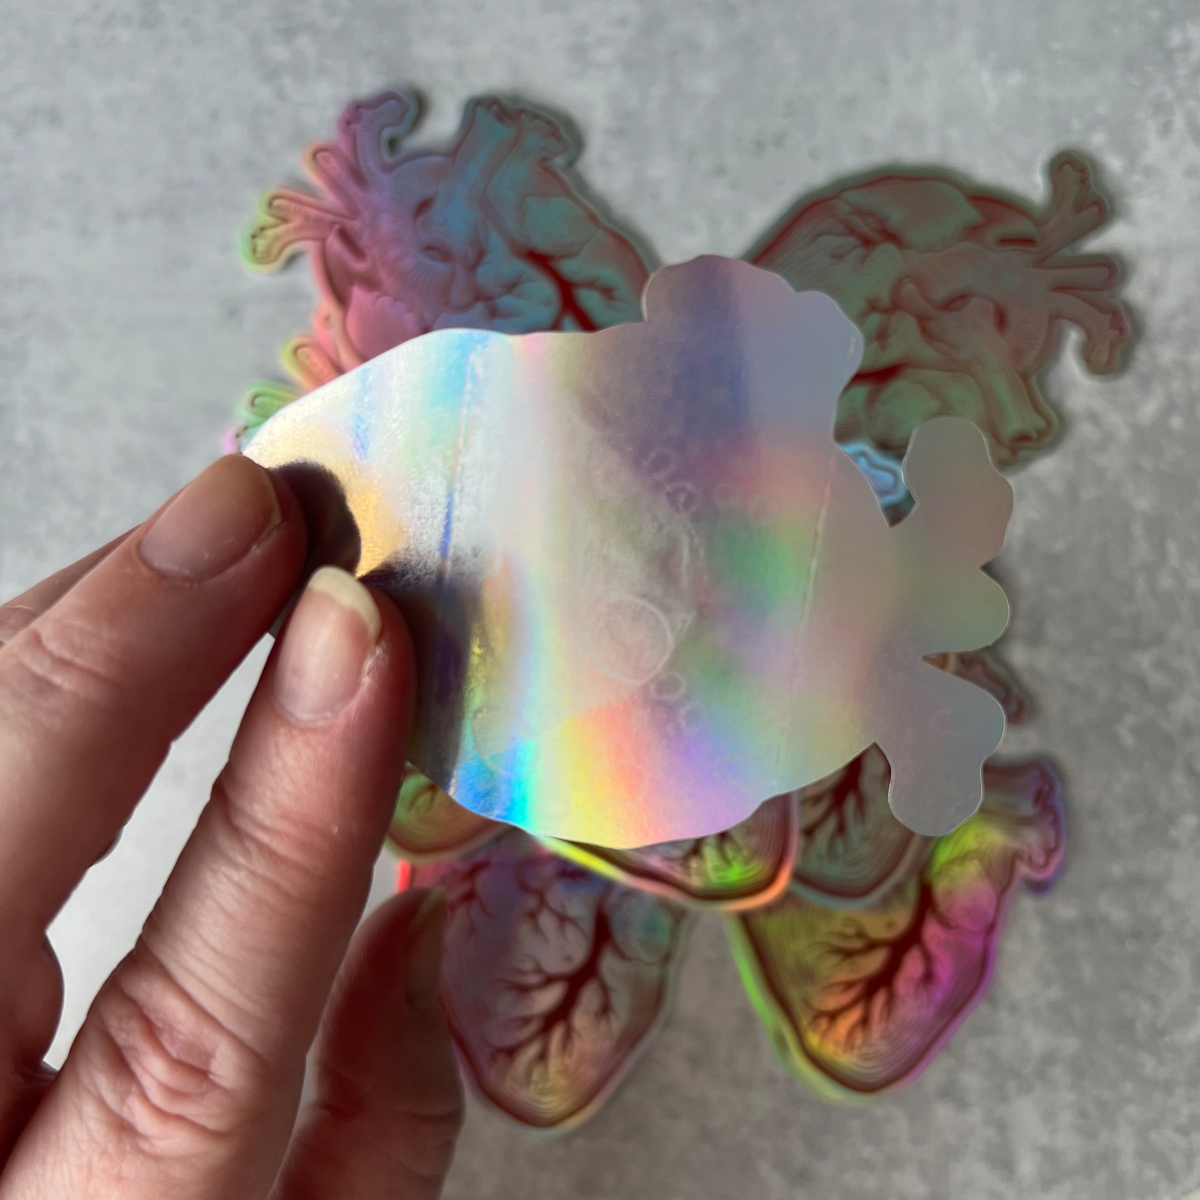 Anatomical Human Heart Vinyl Sticker - Holographic